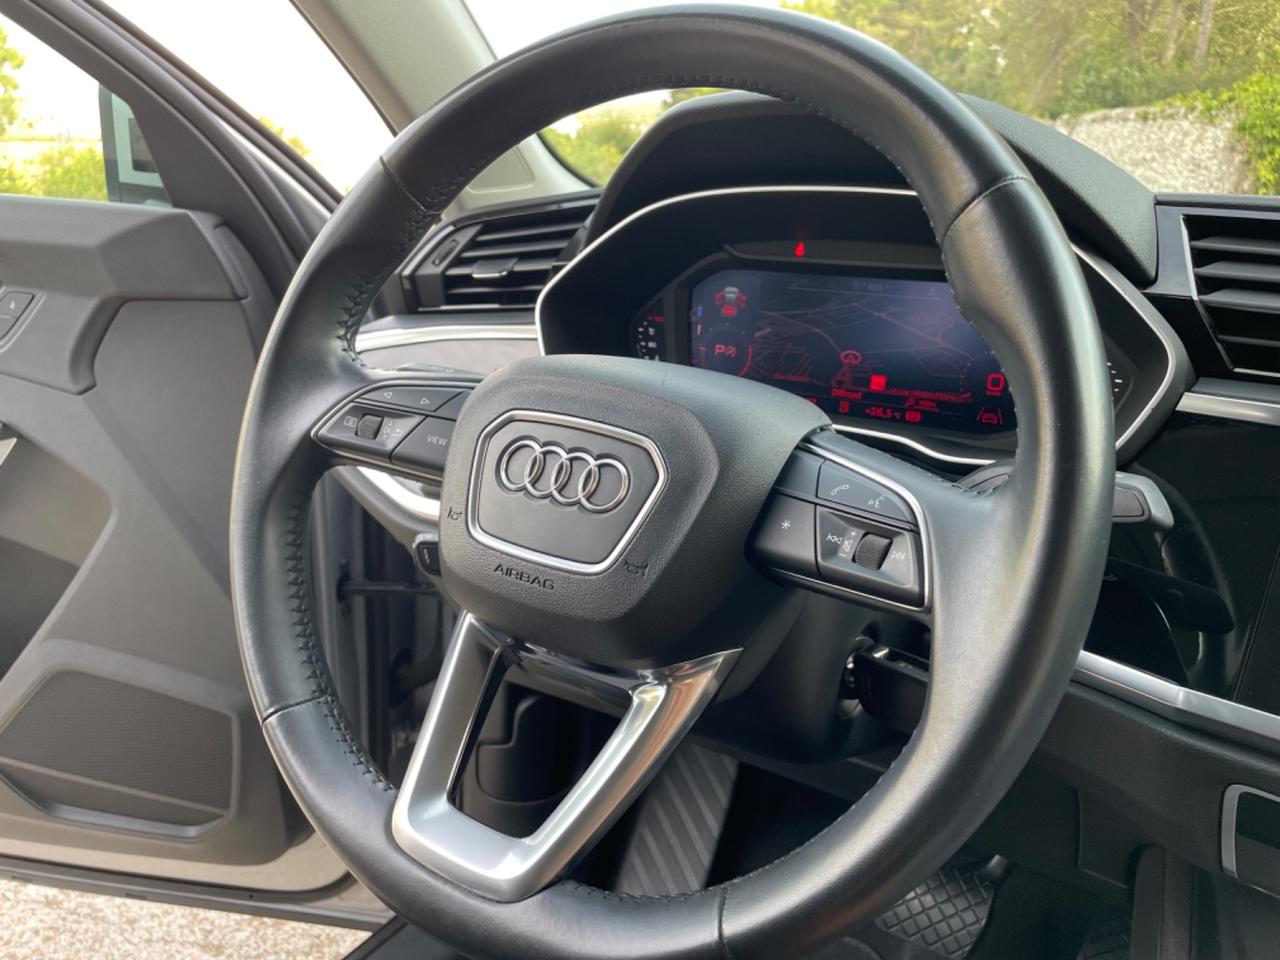 Audi Q3 2.0 TDI - NEW MODEL - STRONIC - 2019